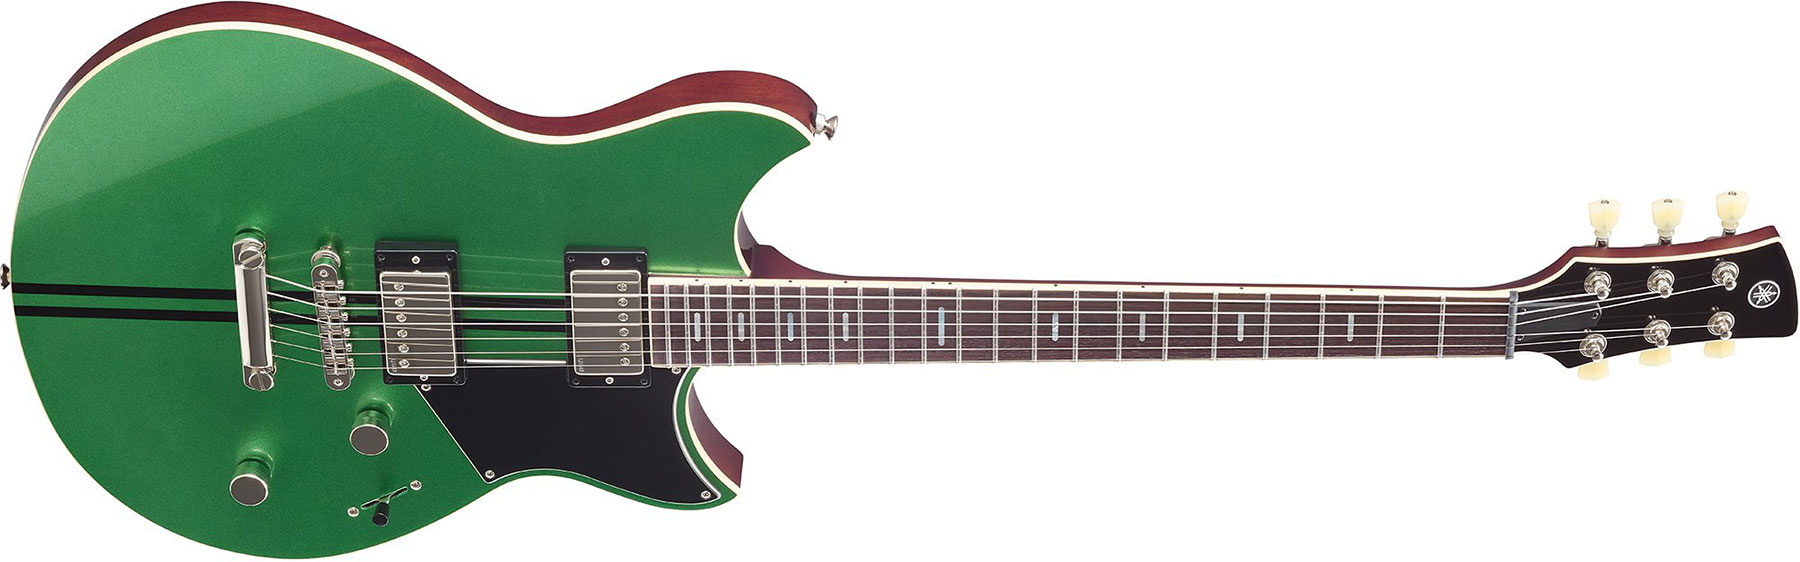 Yamaha Rss20 Revstar Standard Hh Ht Rw - Flash Green - Guitarra eléctrica de doble corte. - Variation 1